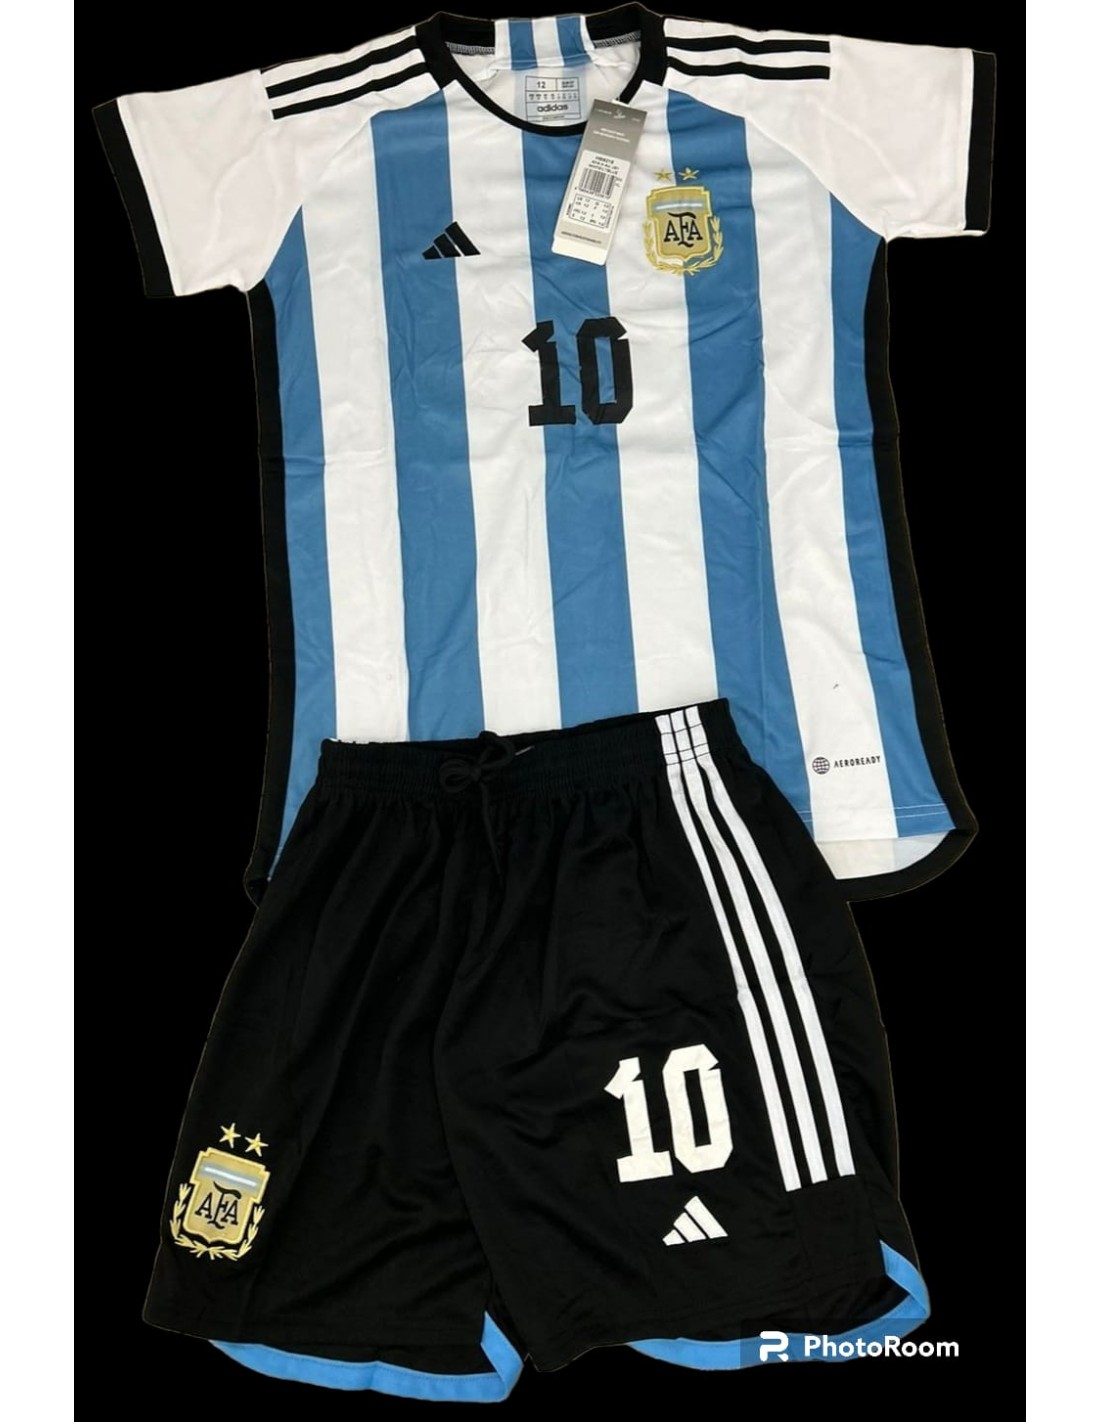 Camisetas - Messi - Niño